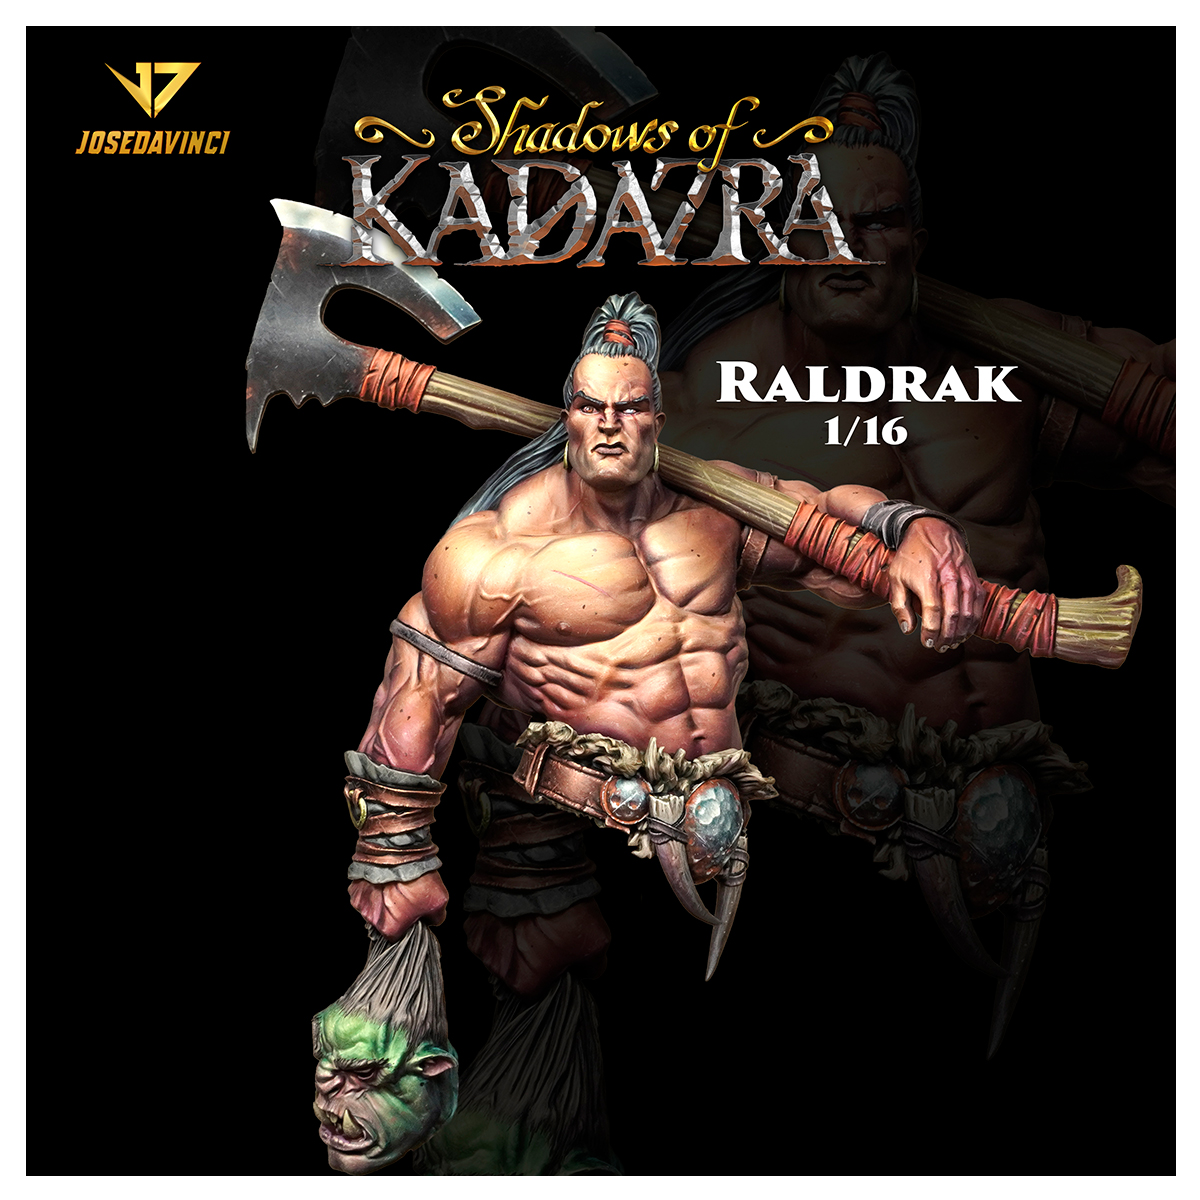 Shadows Of Kadazra – Raldrak bust by Josedavinci